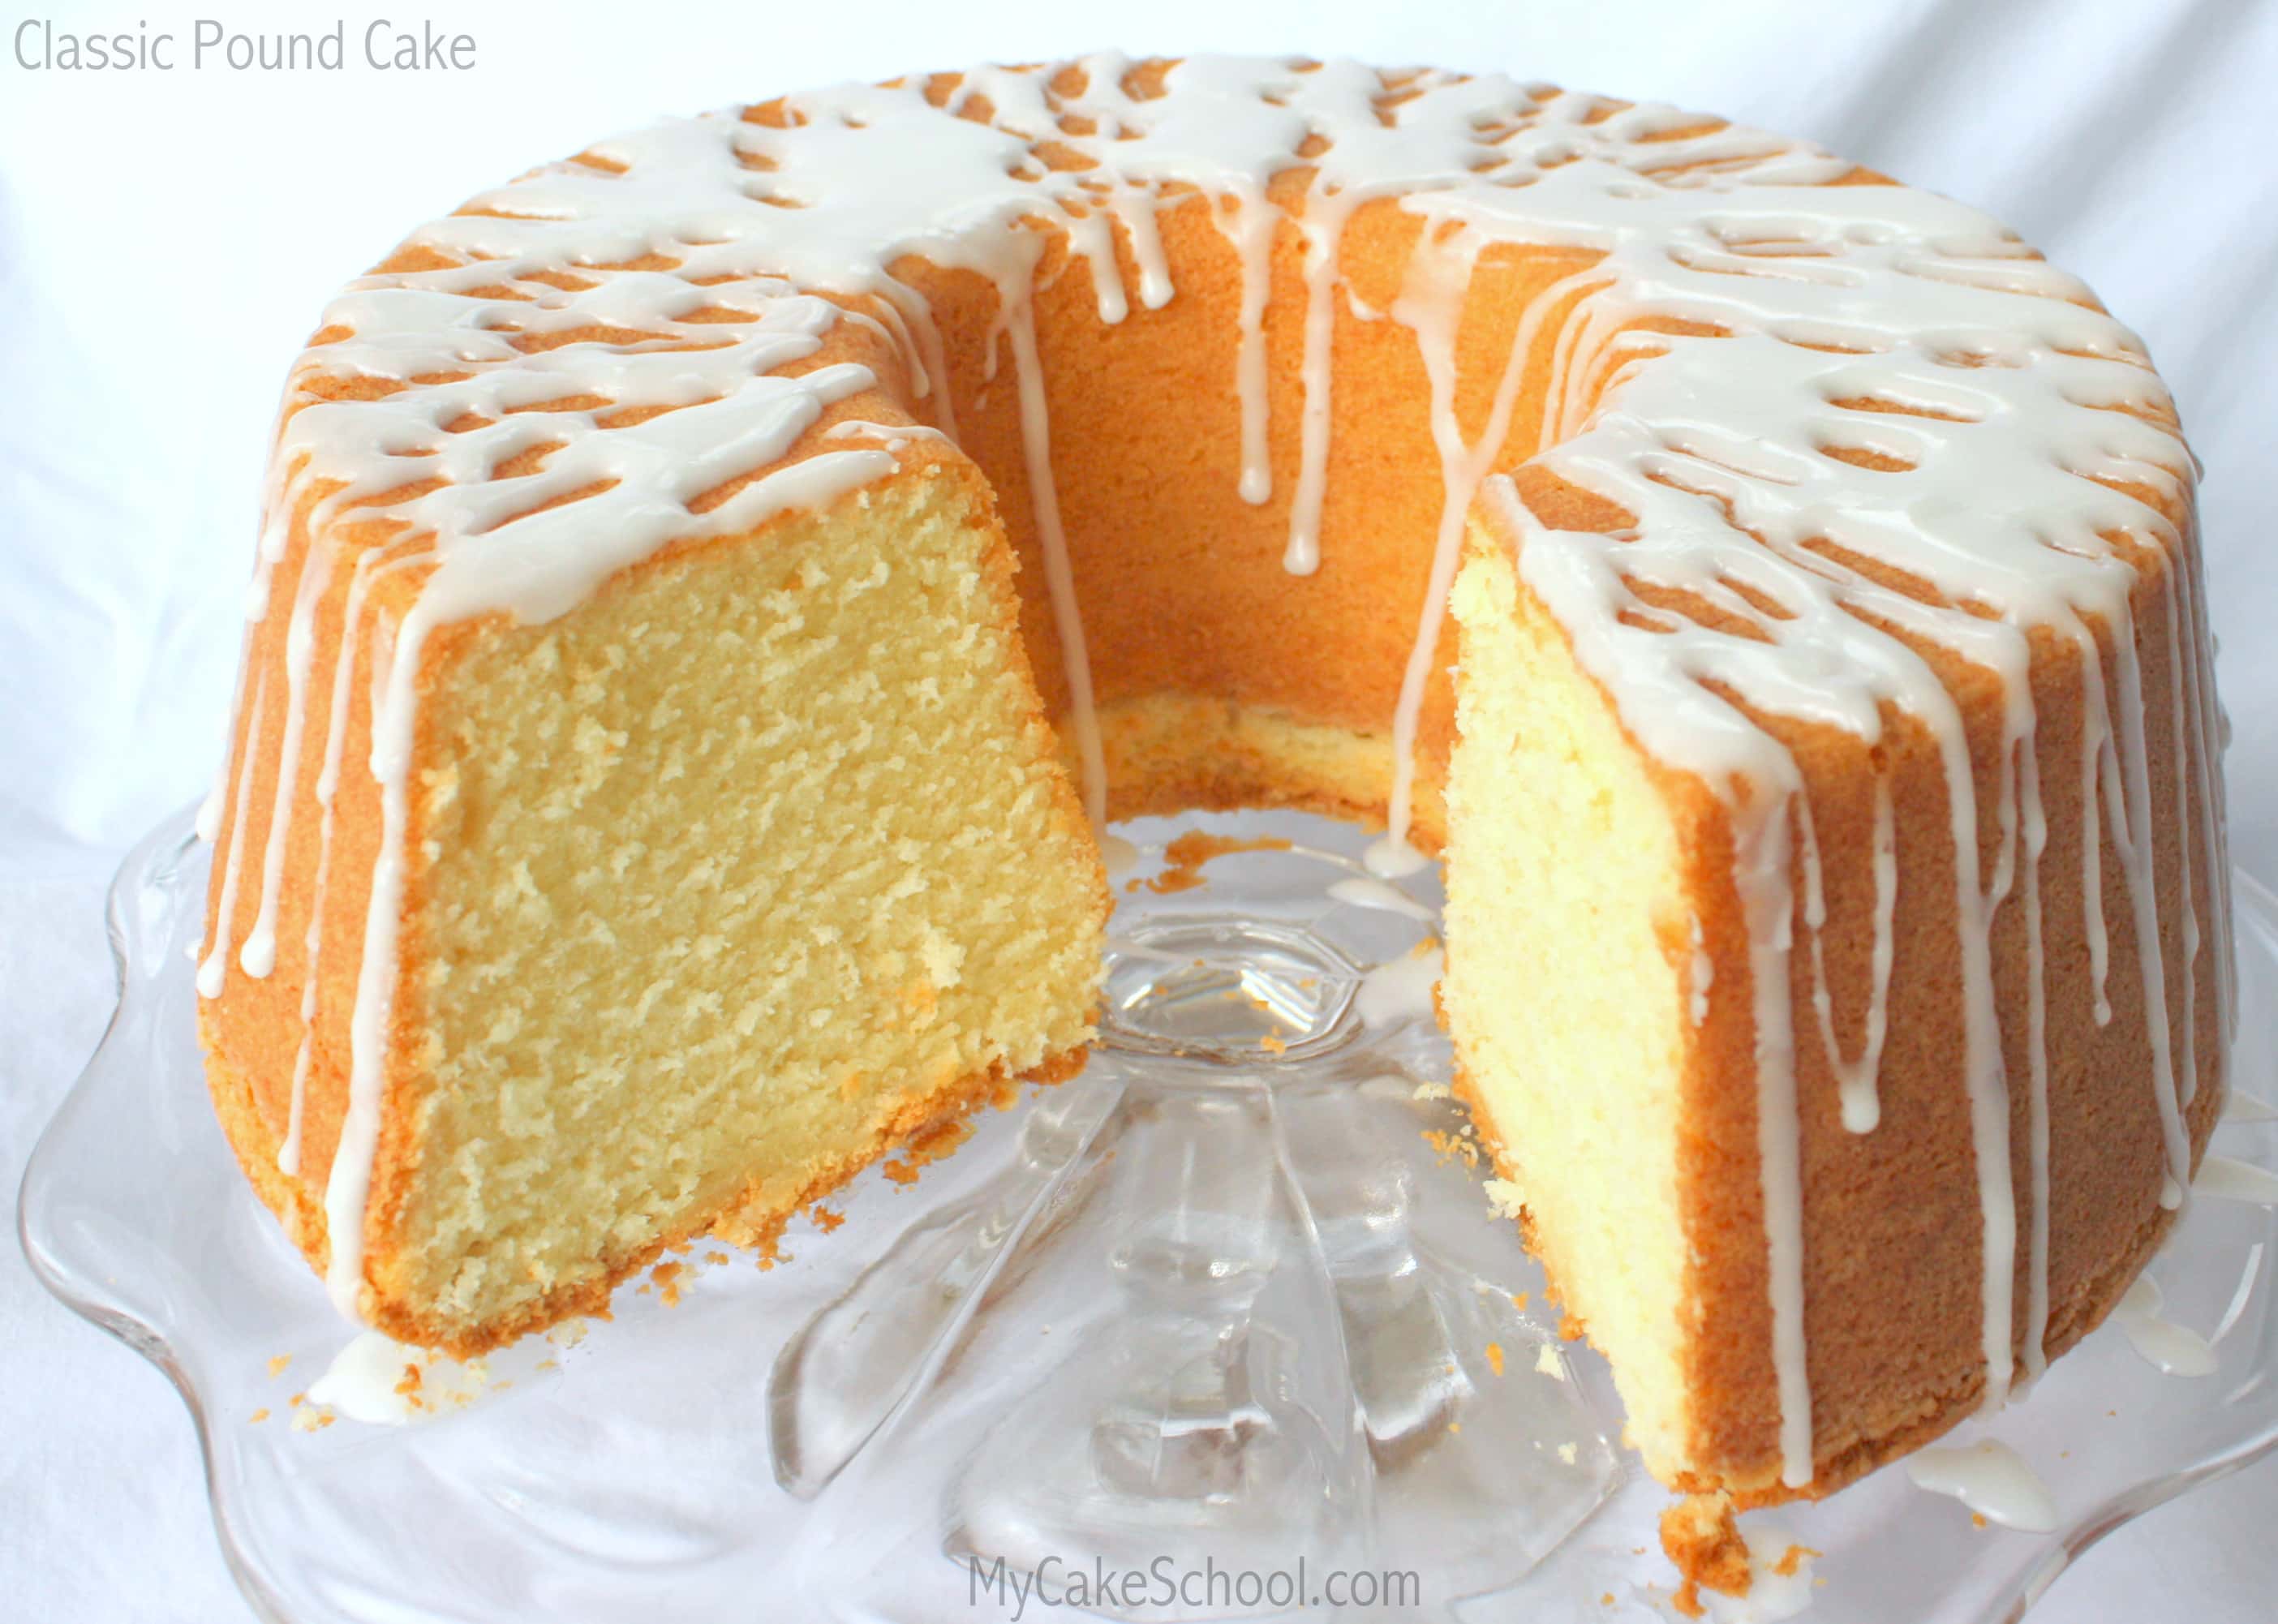 https://www.mycakeschool.com/images/2012/10/Classic-Pound-Cake-Recipe-Image.jpg